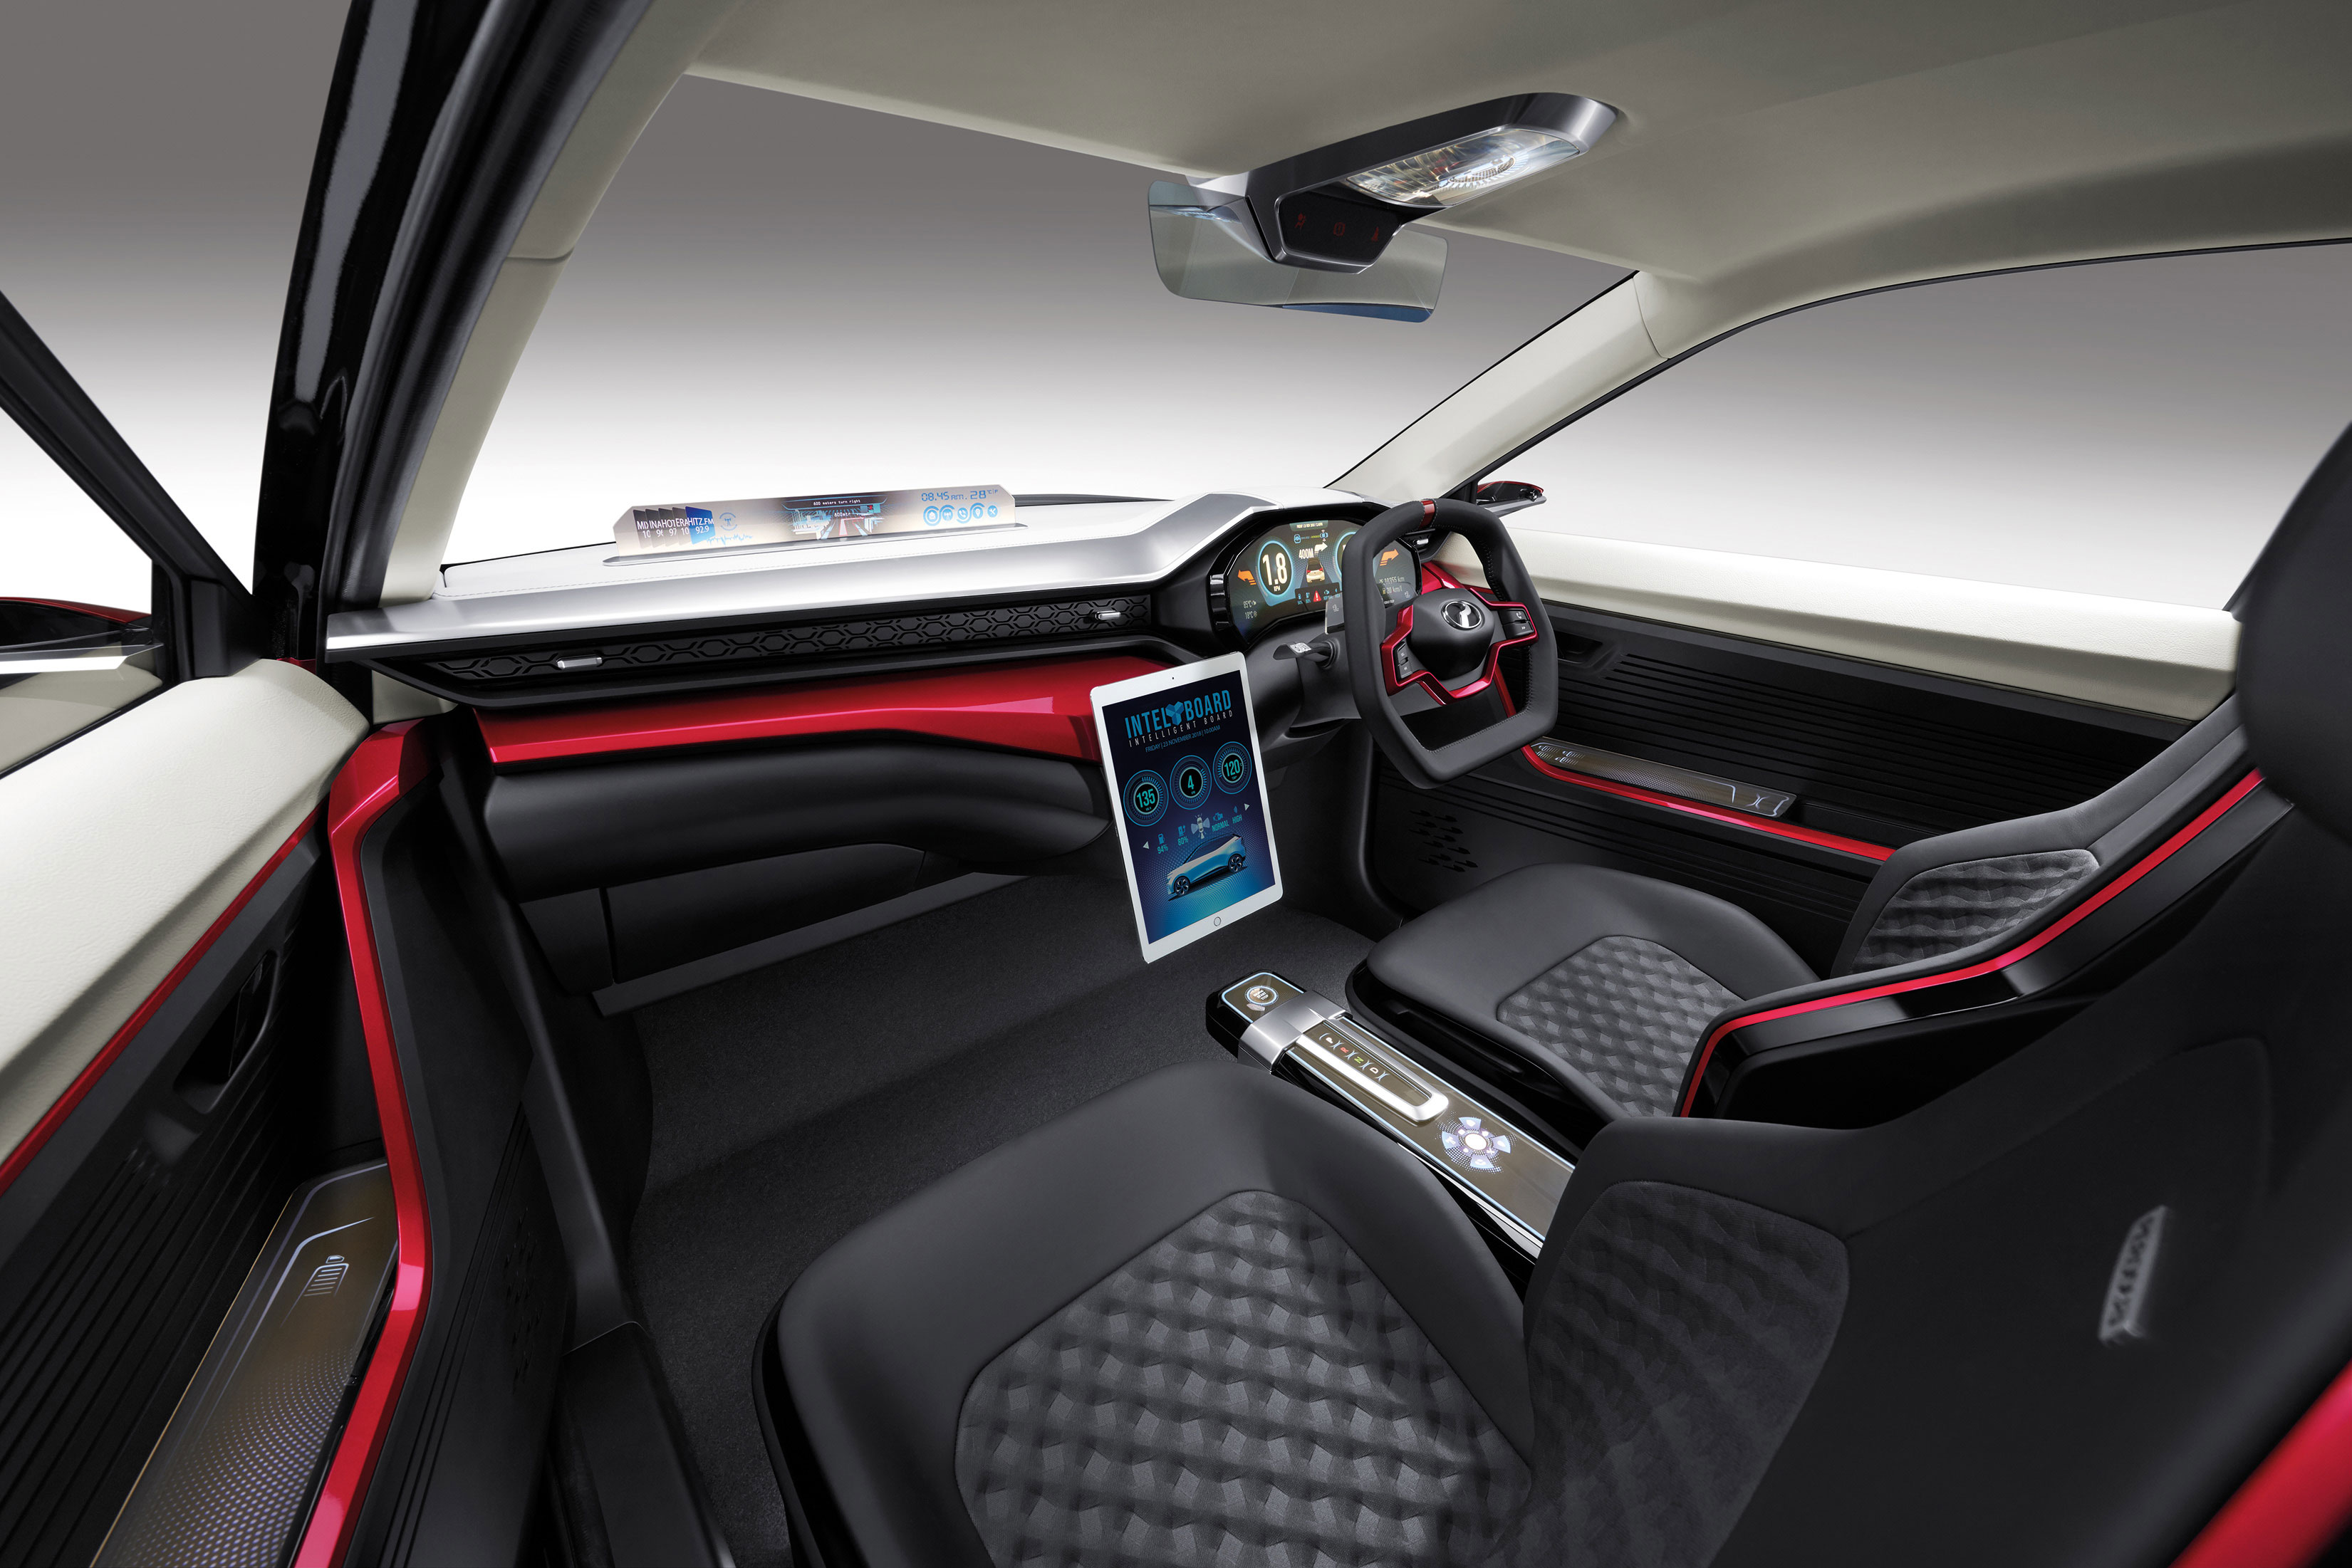 X-Concept-Dashboard - Paul Tan's Automotive News